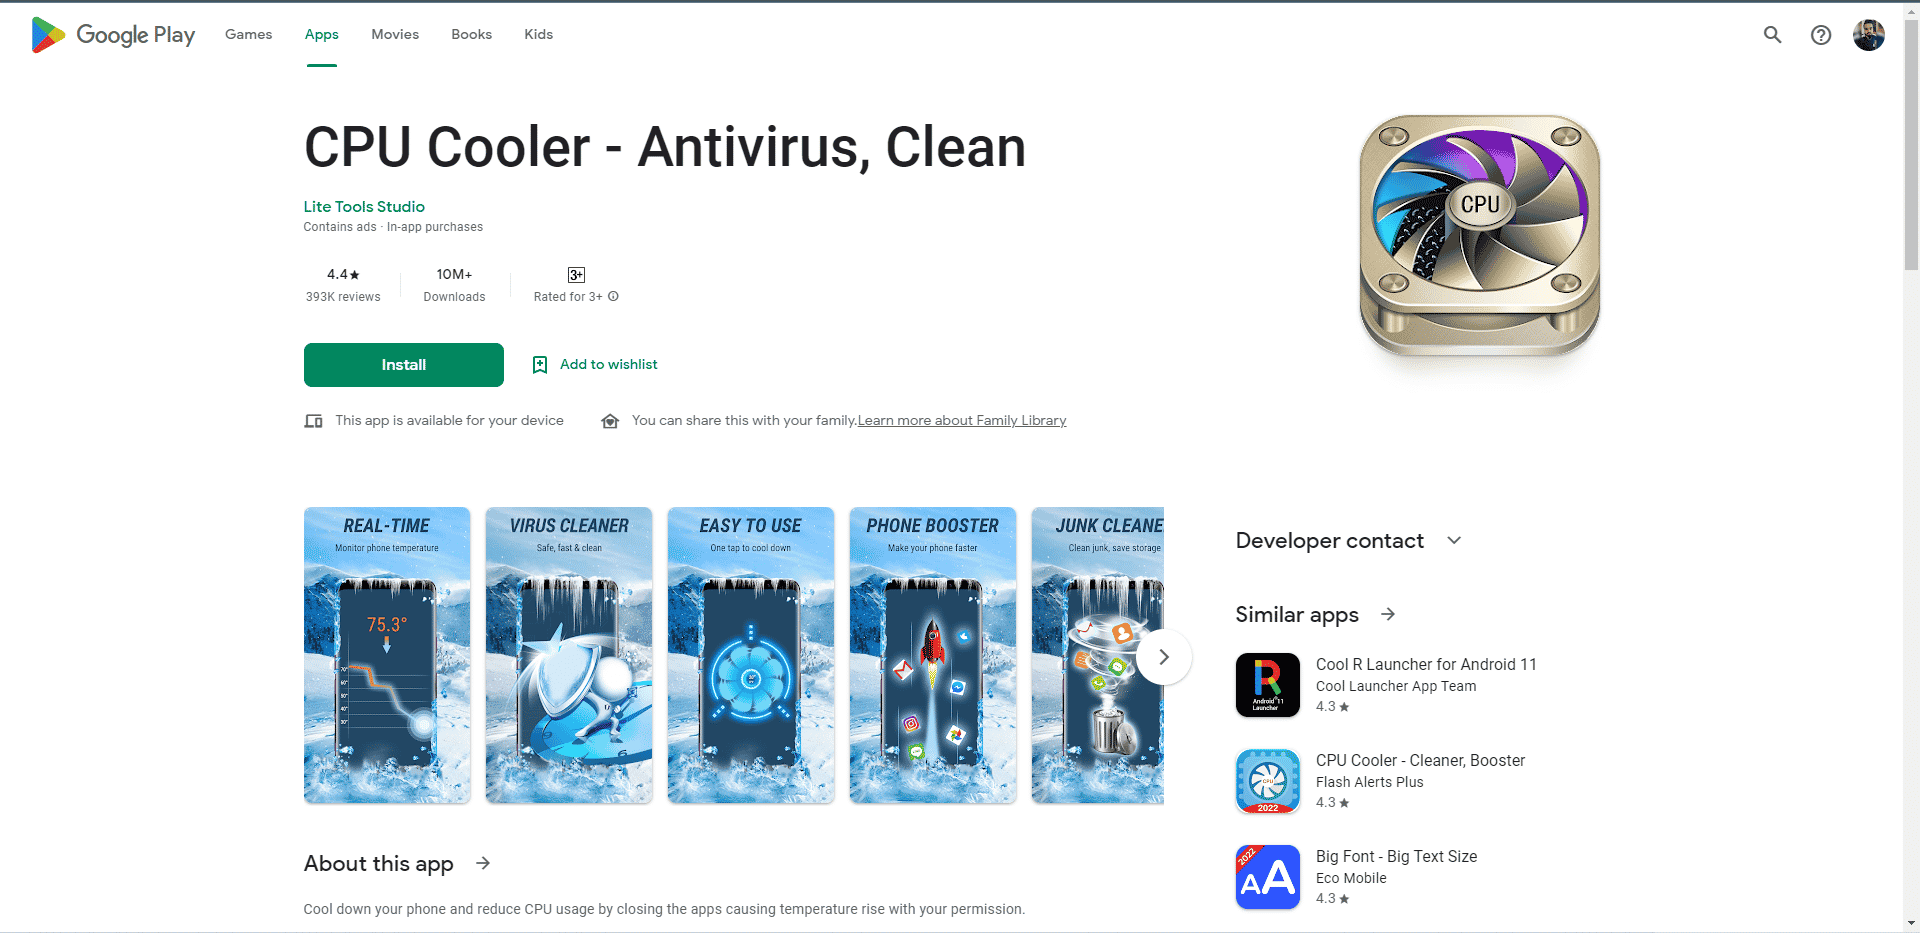 CPU Cooler Antivirus Clean playstore webpage